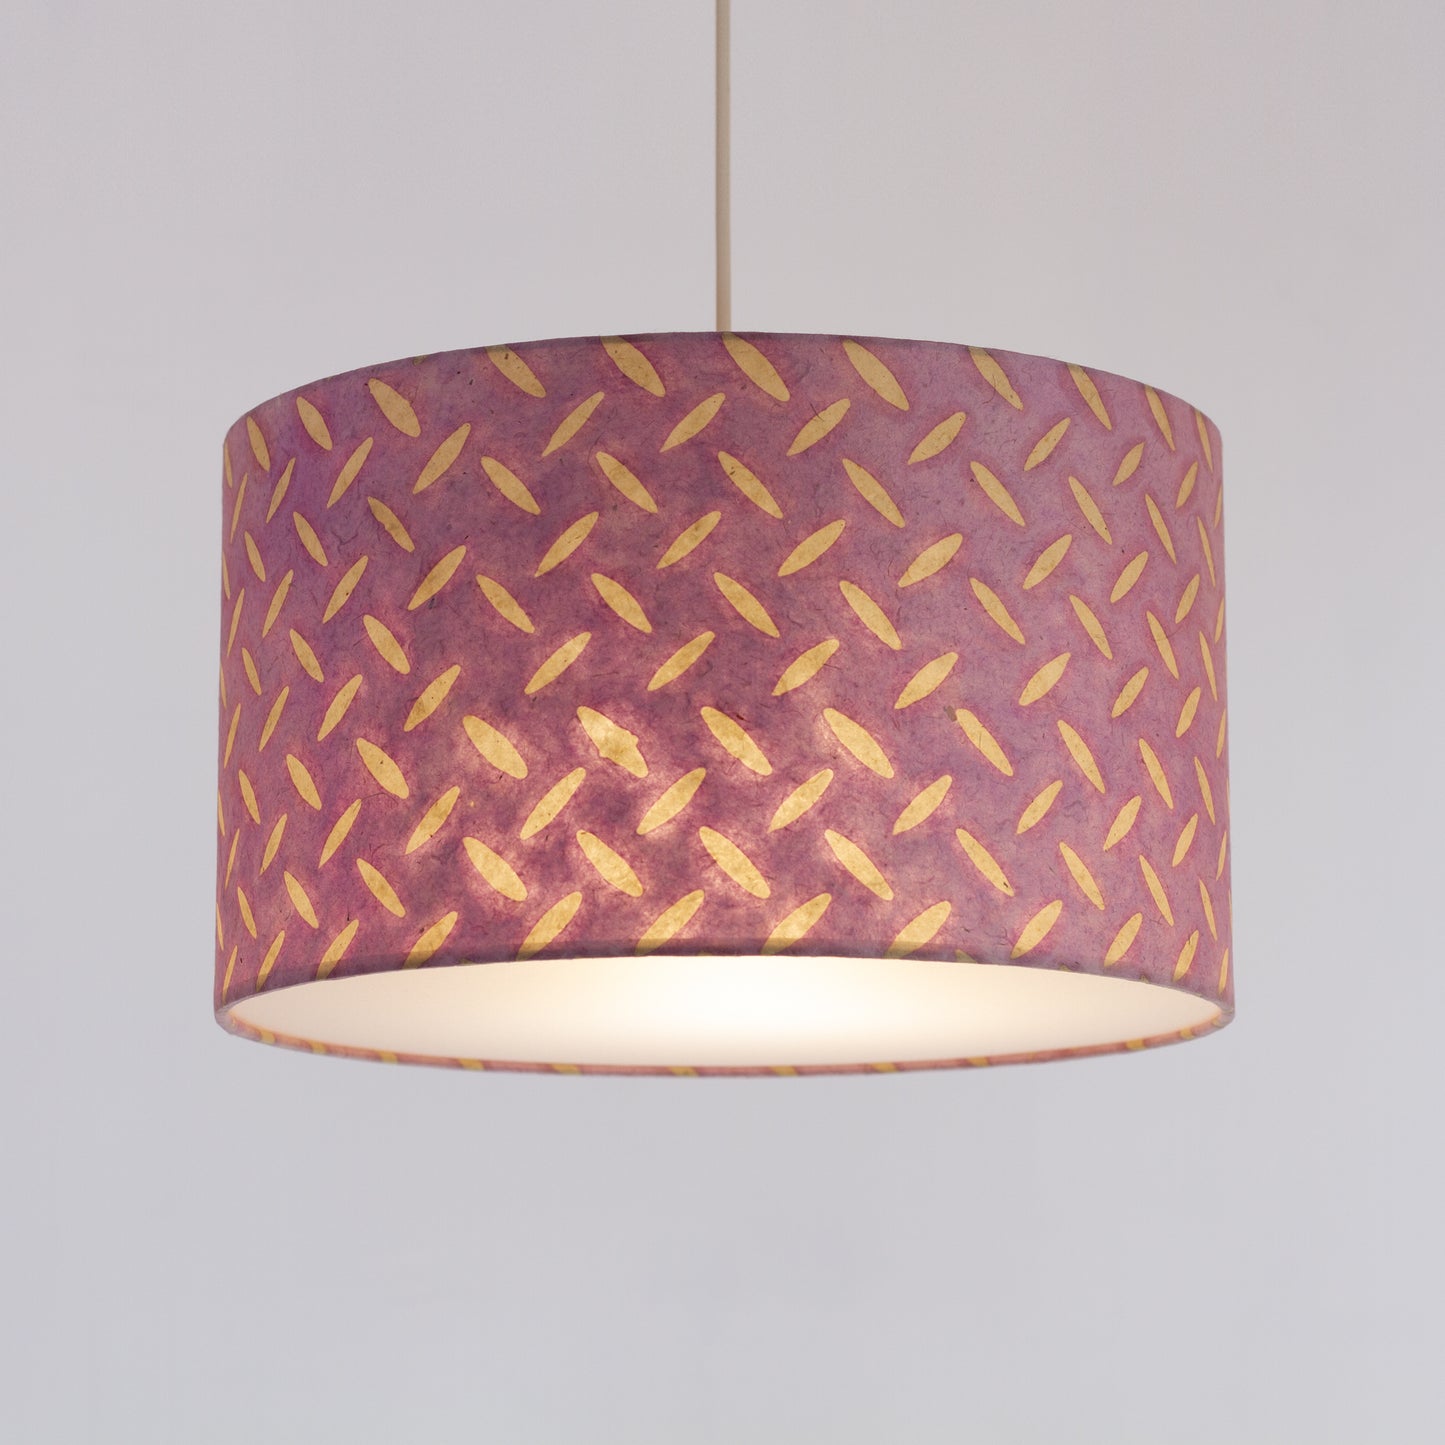 Drum Lamp Shade - B121 ~ Batik Tread Plate Lilac, 35cm(d) x 20cm(h)